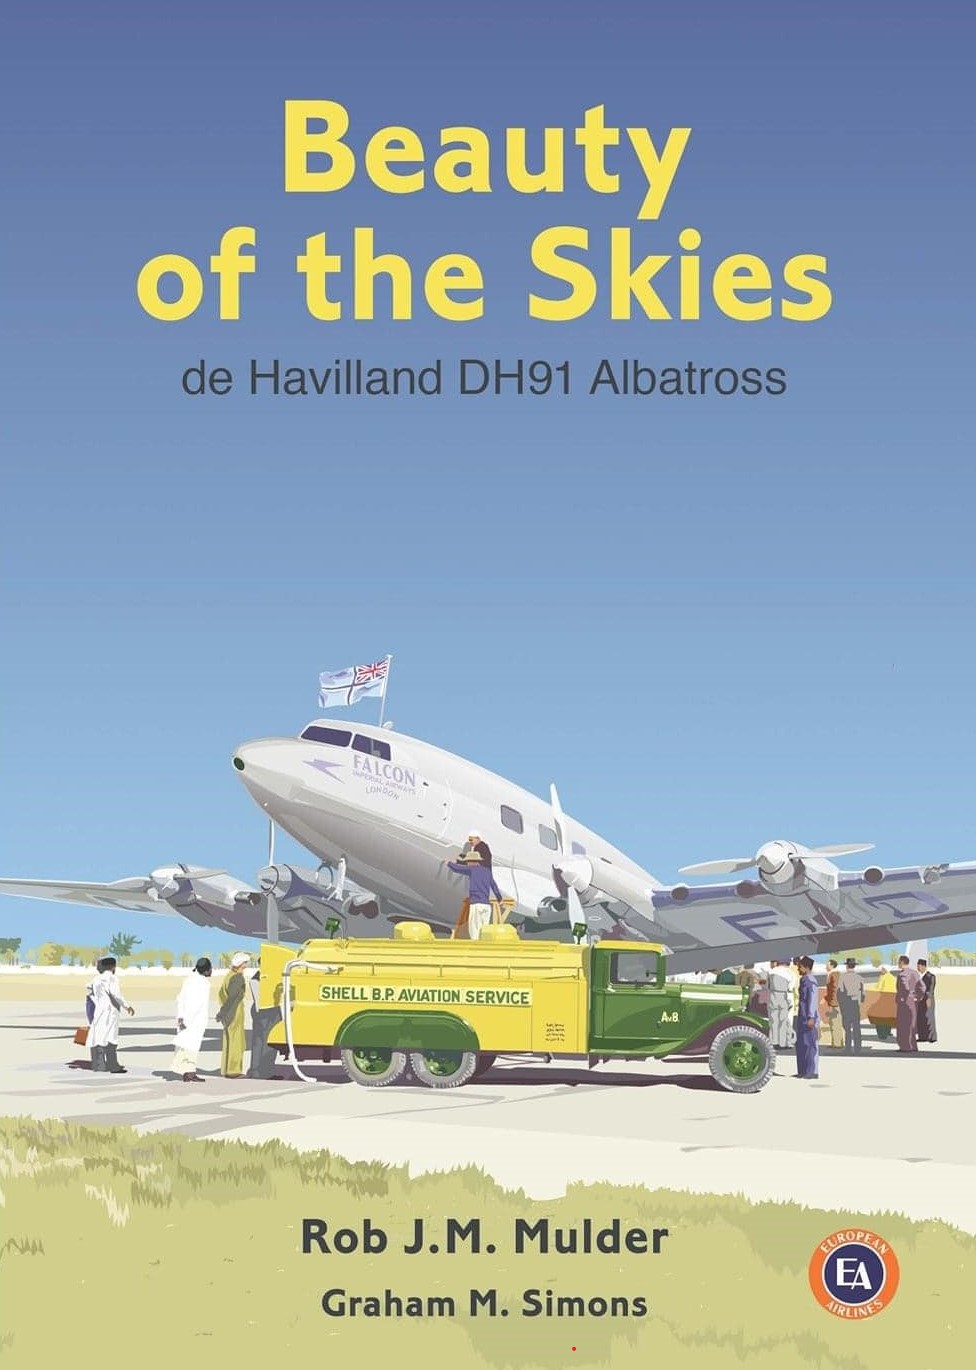 Beauty of the Skies – de Havilland DH91 Albatross